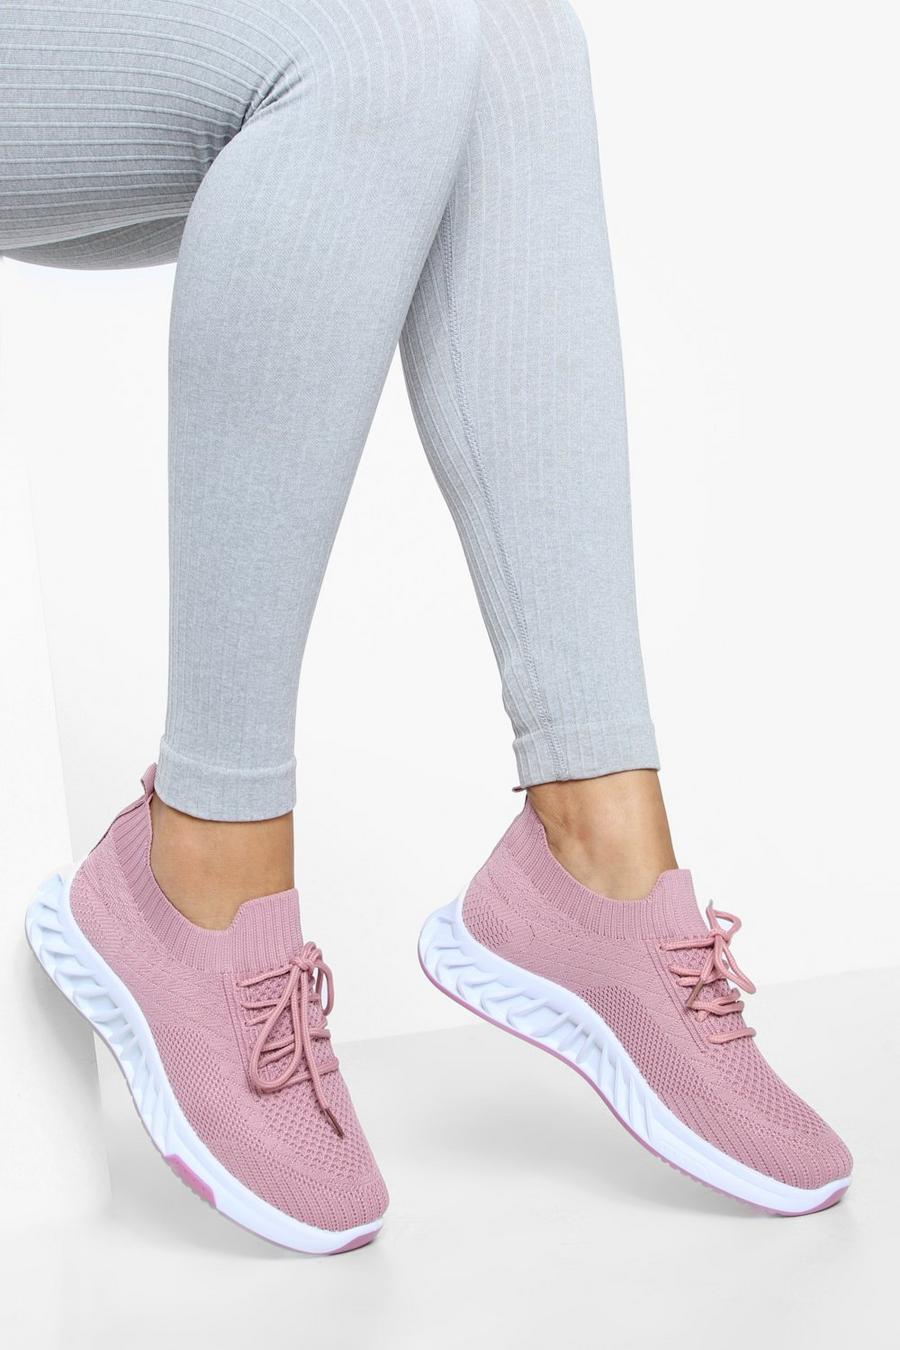 Zapatillas deportivas calcetín de tela con tiras cruzadas, Pink